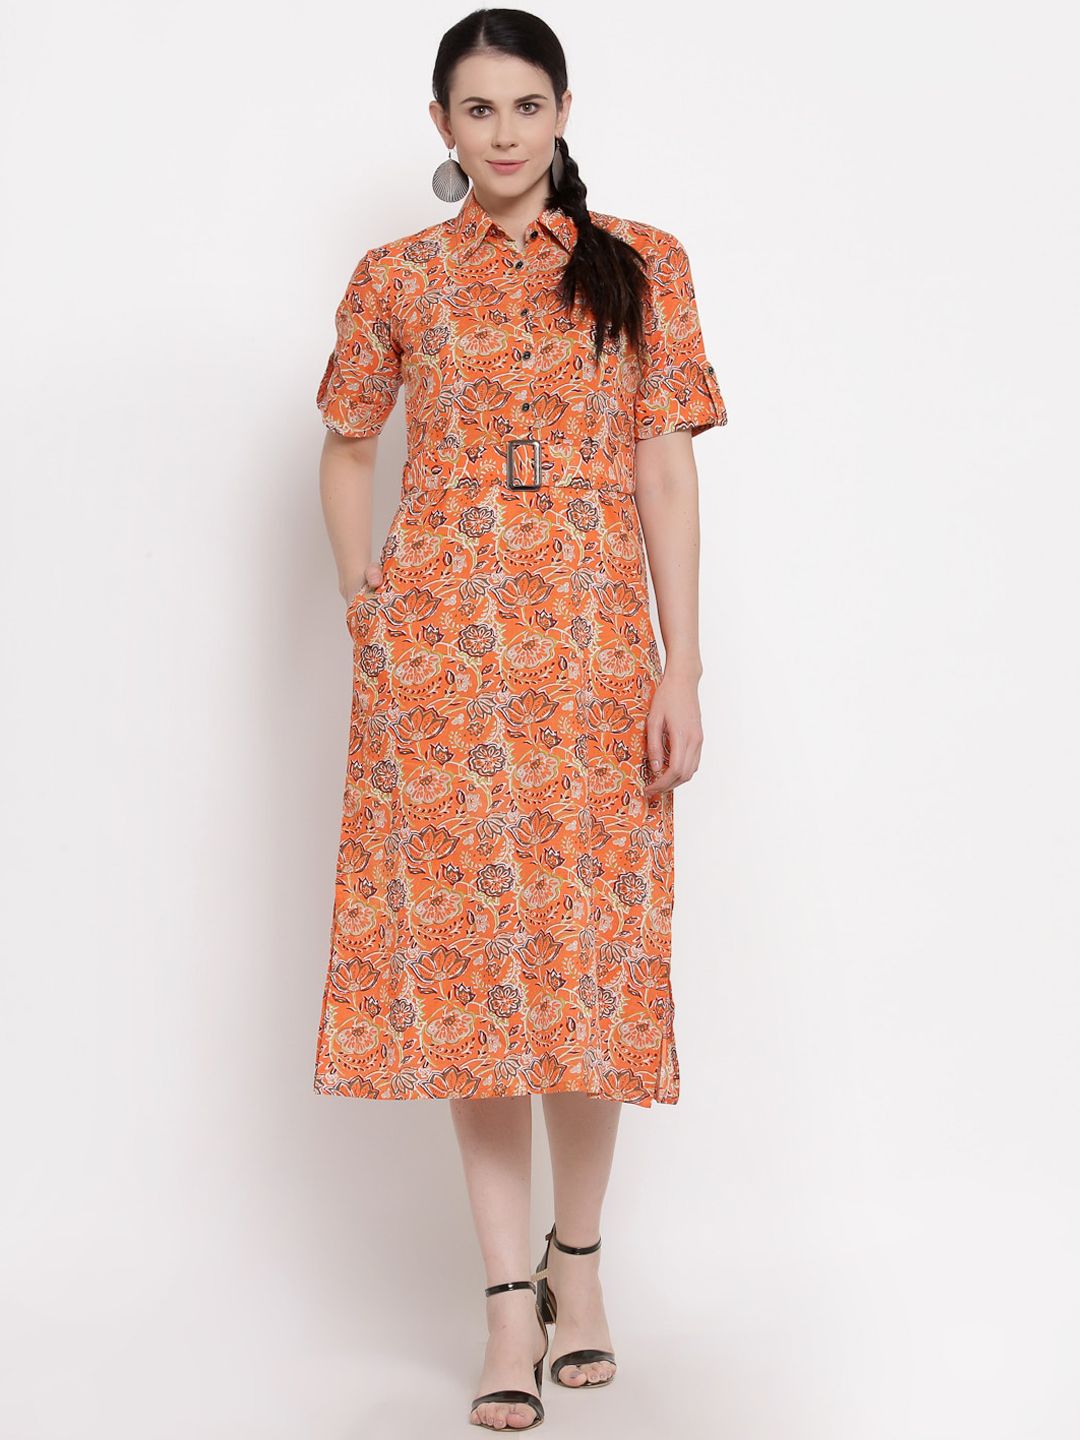 Indibelle Orange & White Floral Cotton Ethnic A-Line Midi Dress Price in India